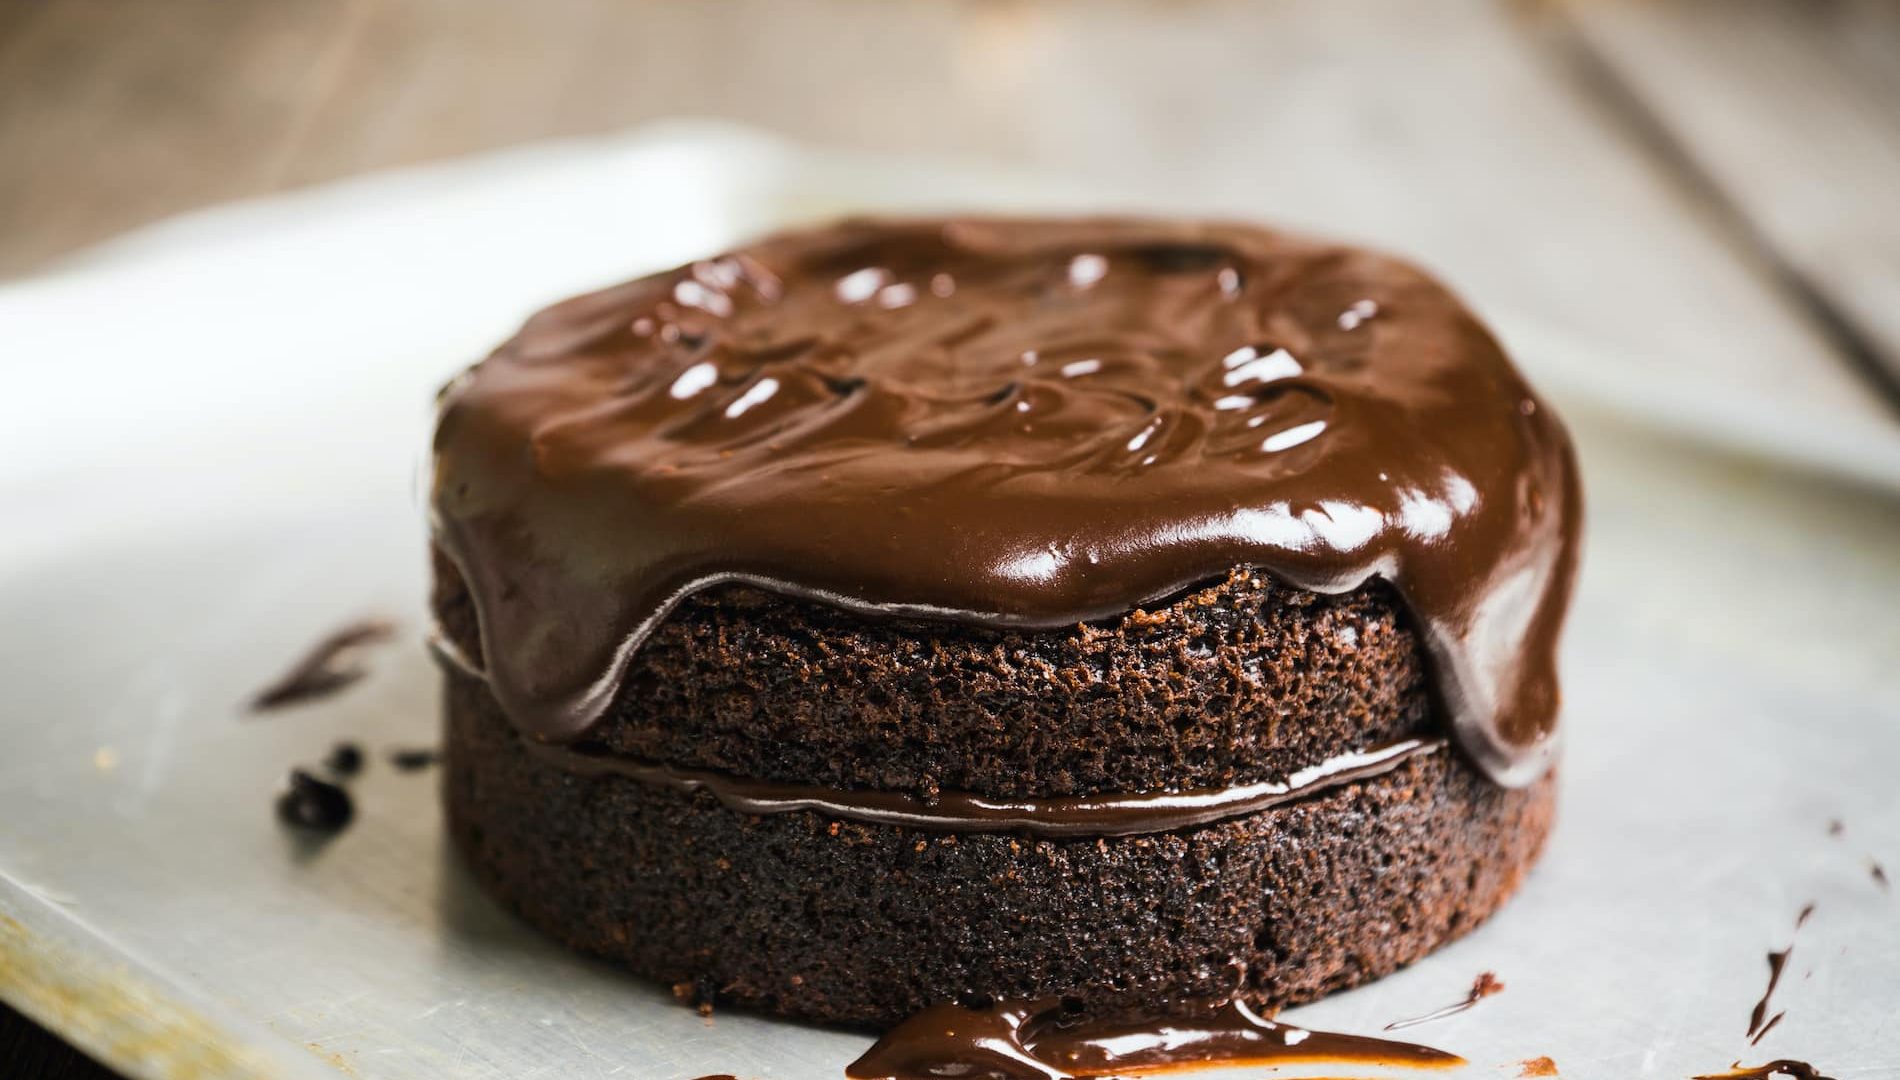 Chocolate cake covered with ganache